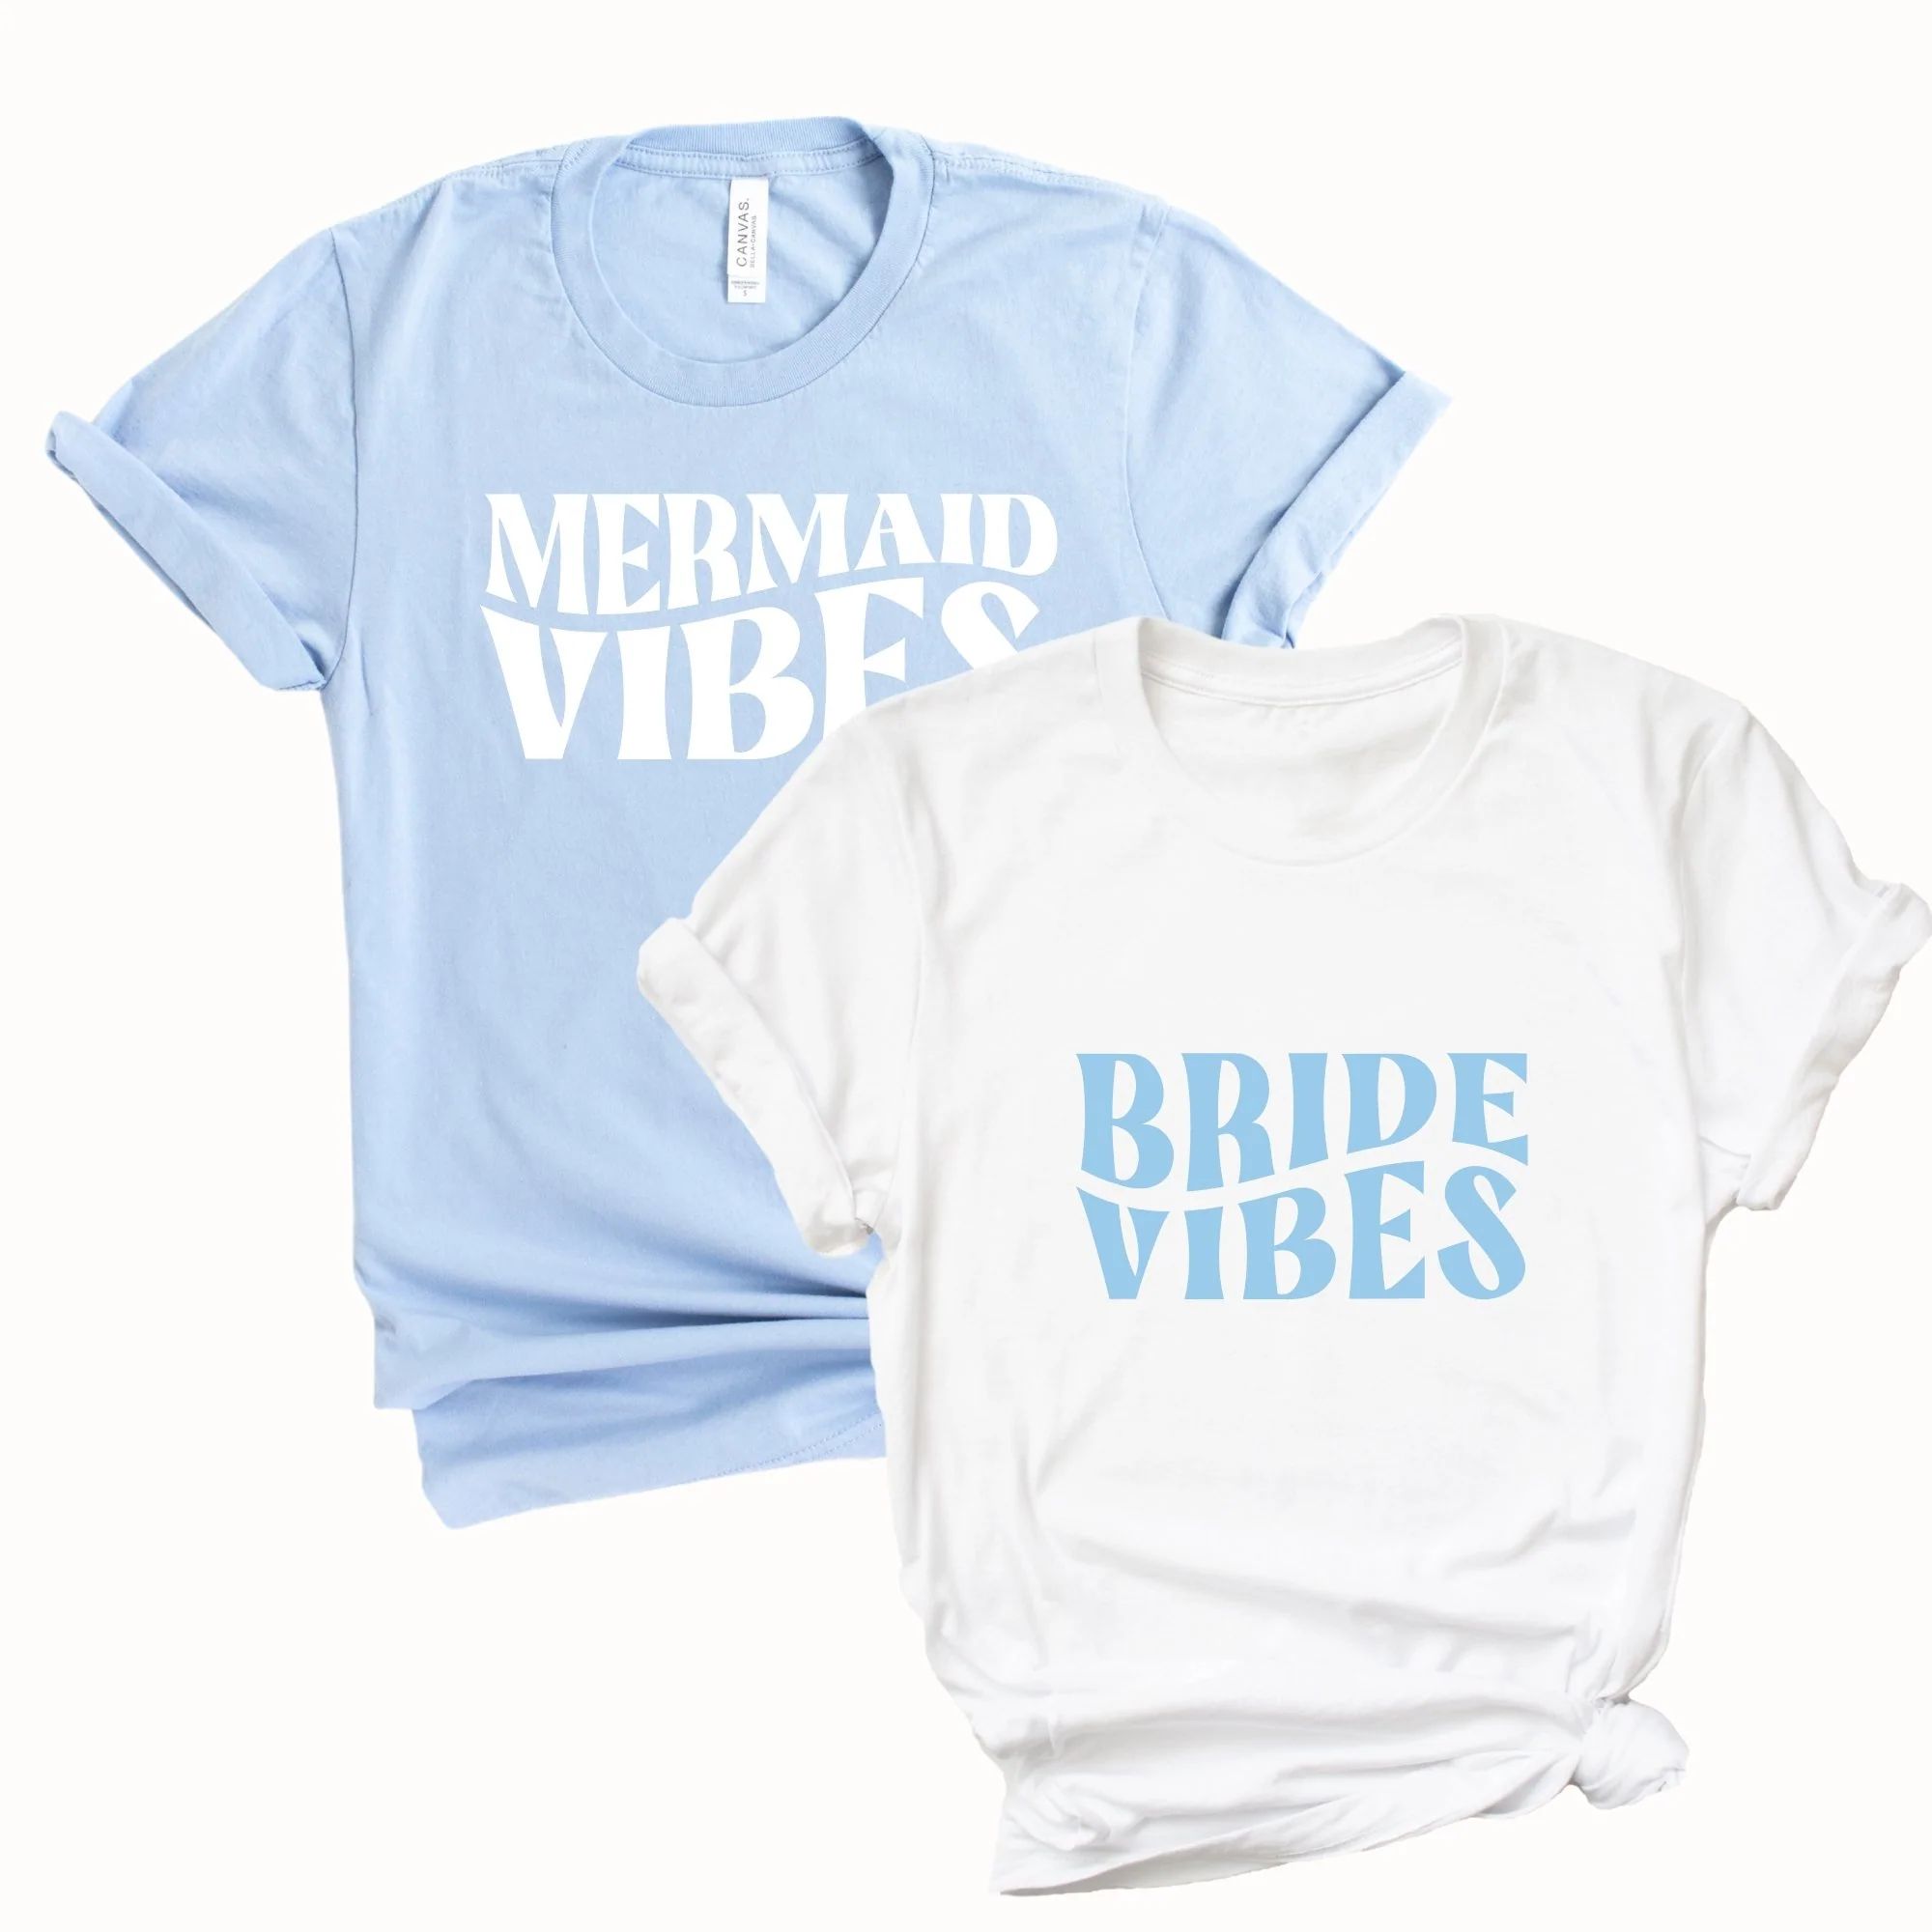 Bride Vibes / Mermaid Vibes Shirt | Sprinkled With Pink